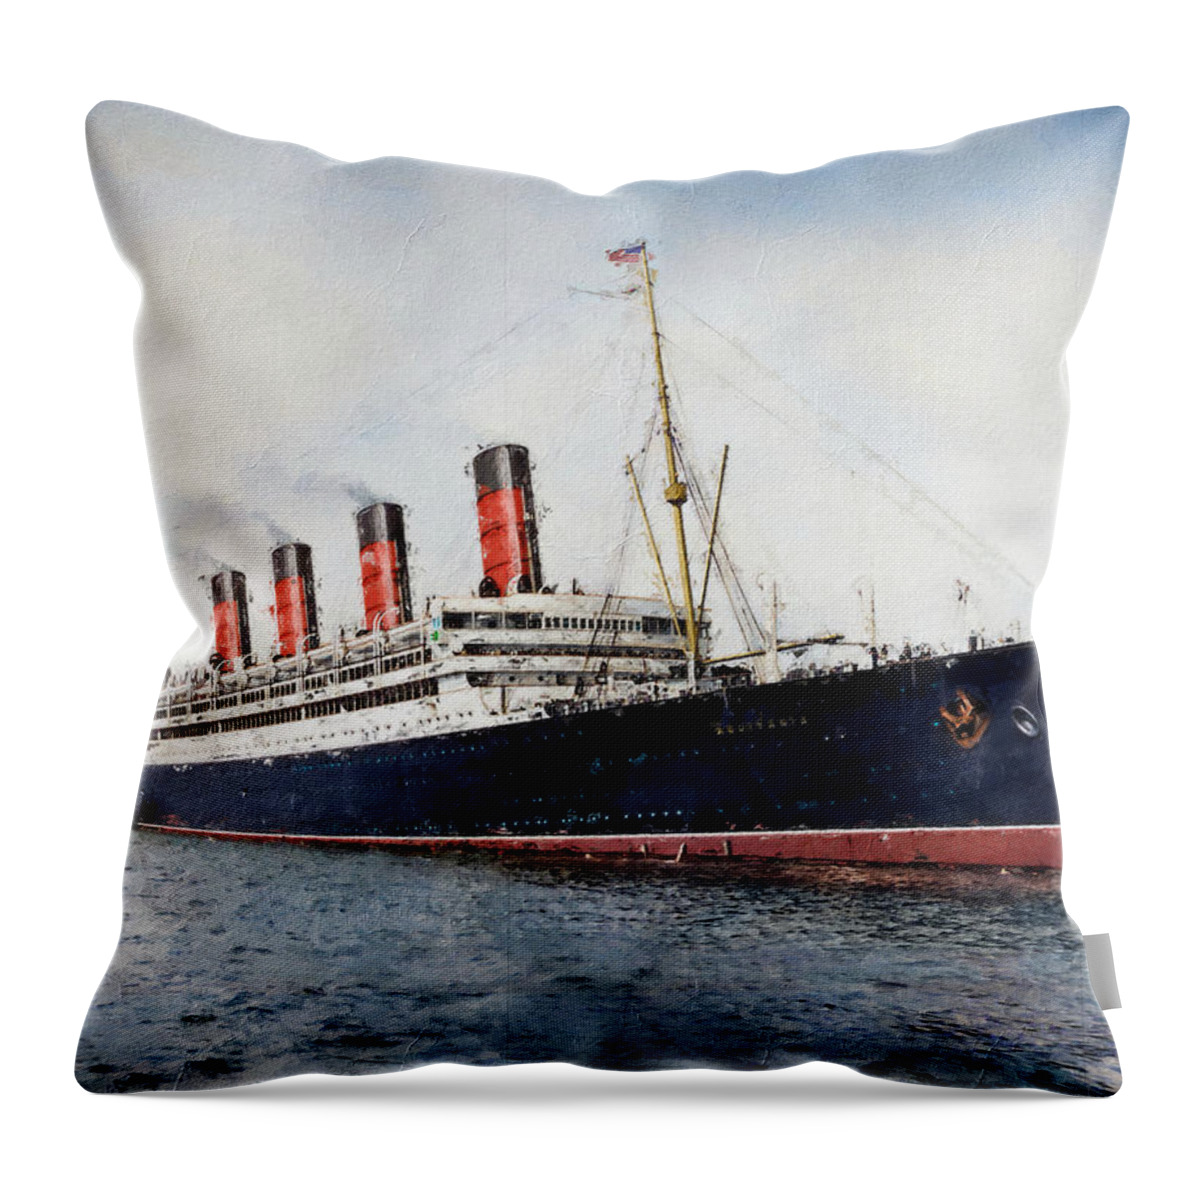 Steamer Throw Pillow featuring the digital art R.M.S. Aquitania - The Ship Beautiful by Geir Rosset